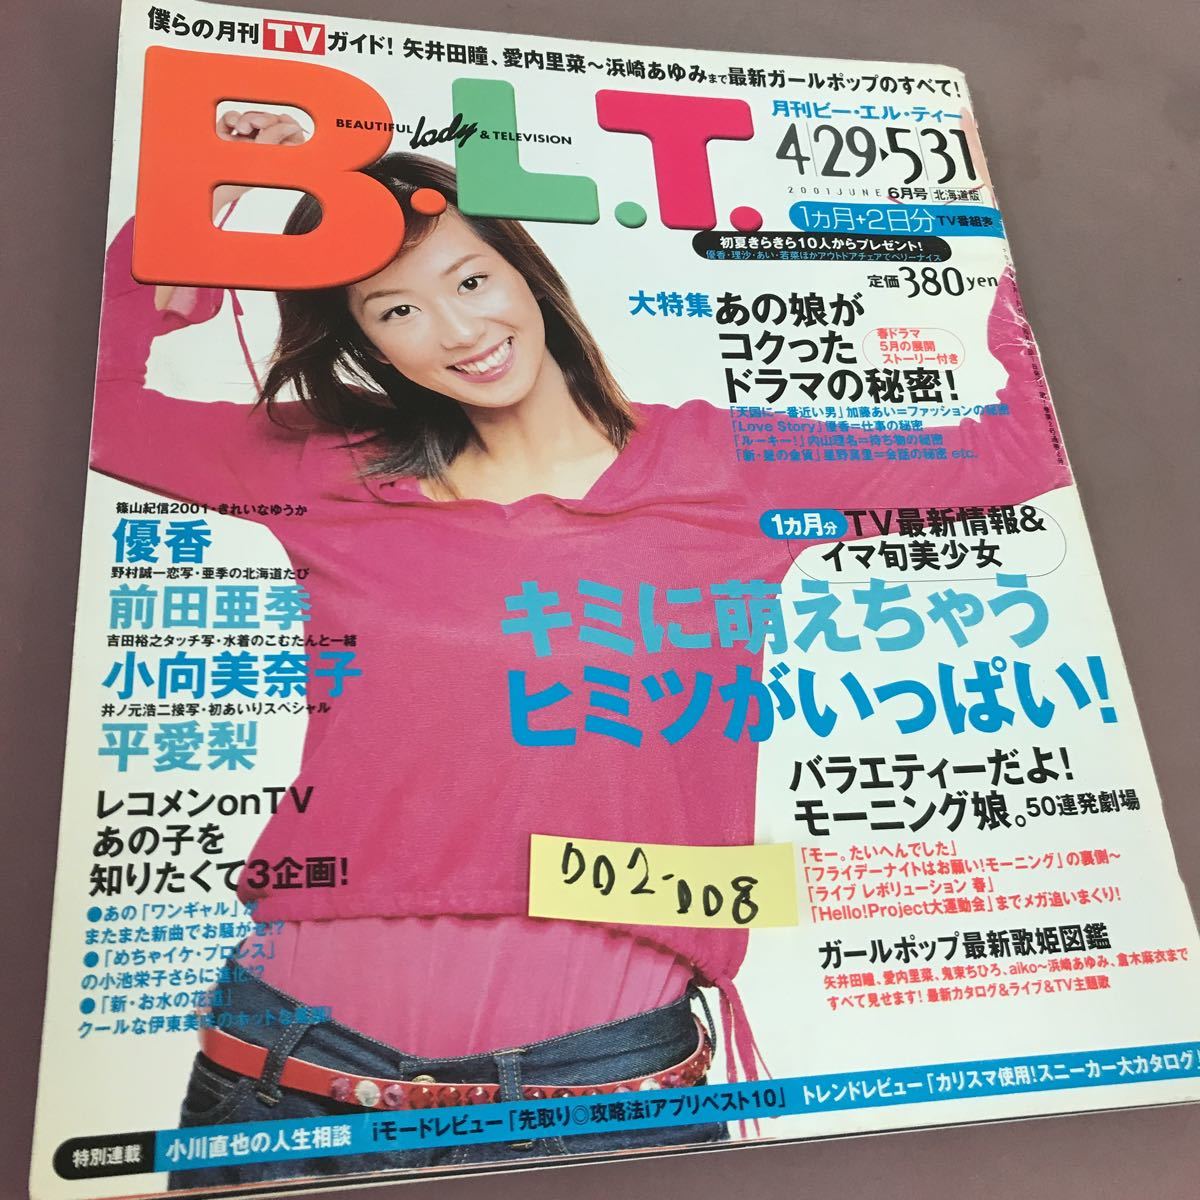 新着商品 D02-008 B.L.T. 6月号 北海道版 優香 モーニング娘。 平愛梨